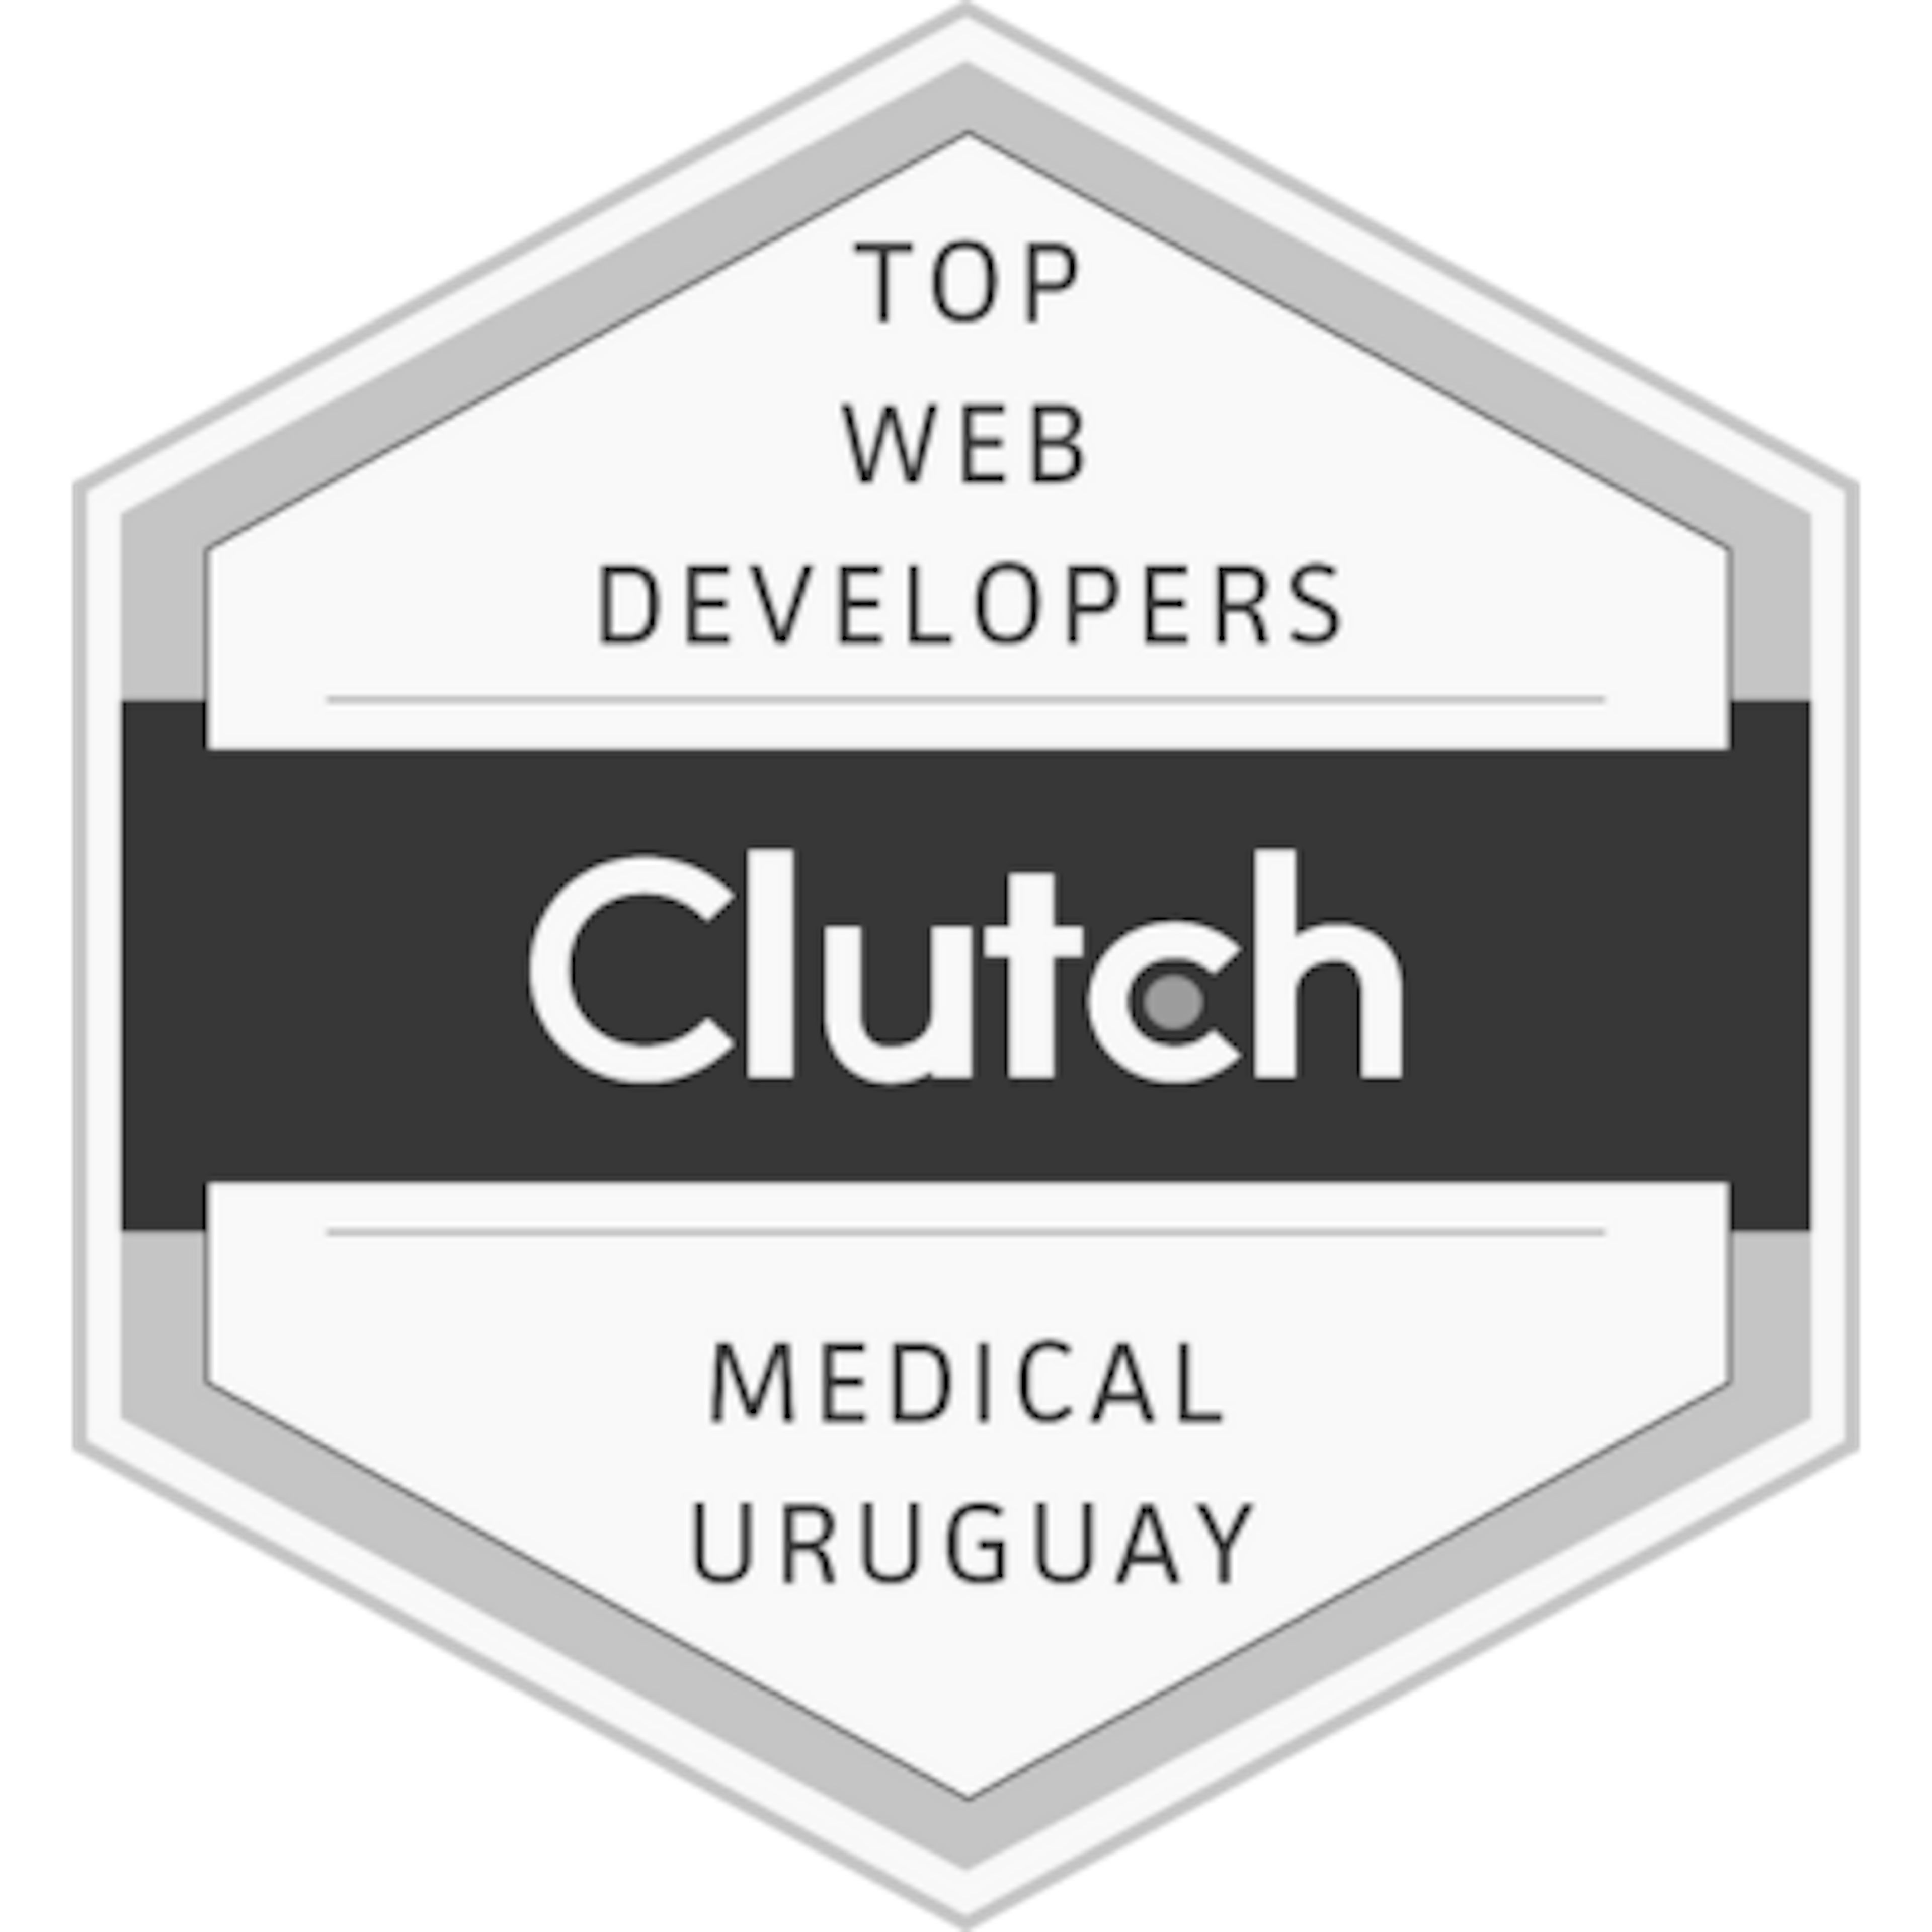 Top Web Developers - Medical Uruguay